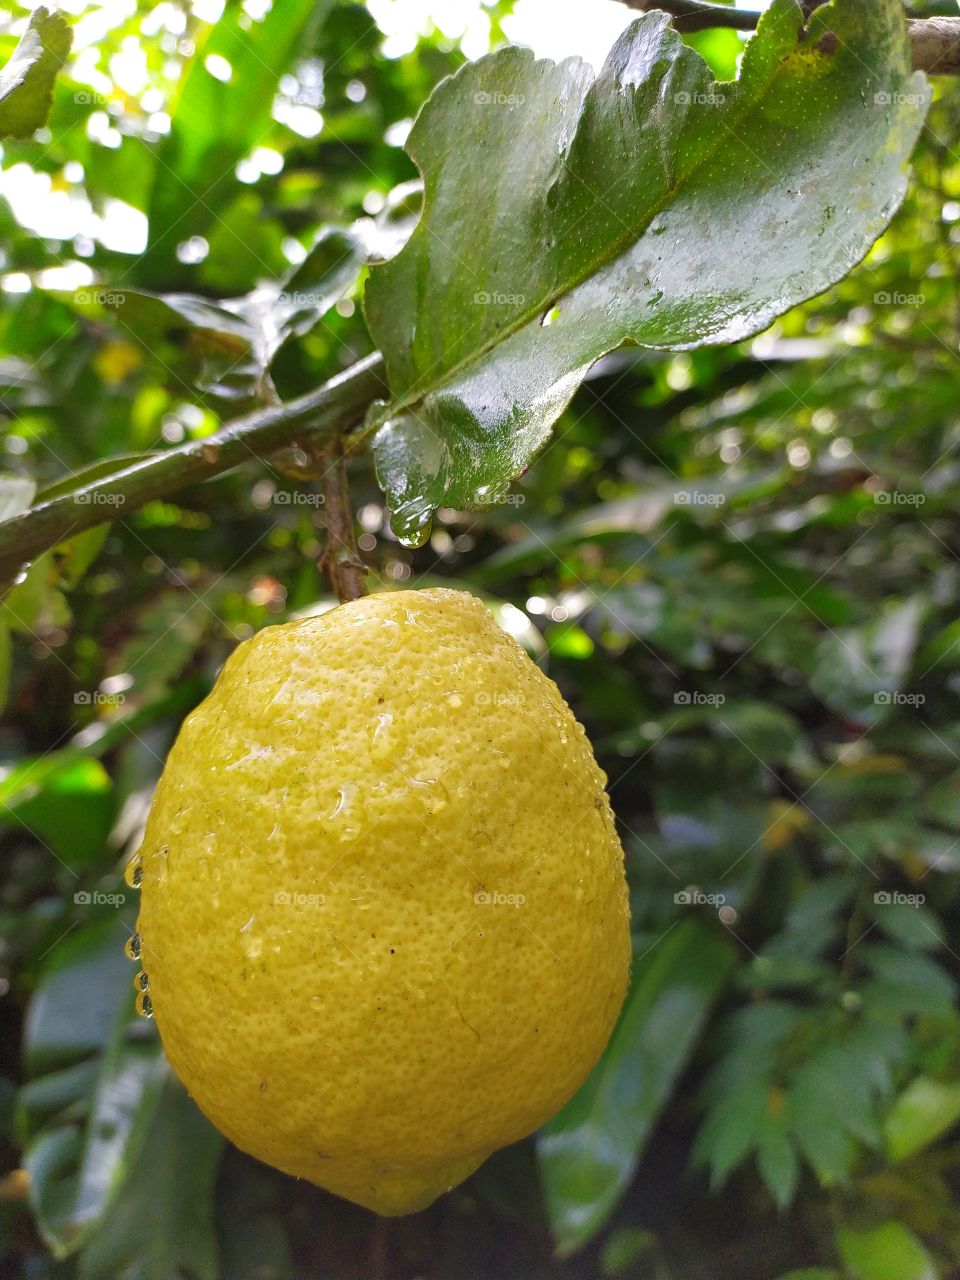 a sicilian lemon in a rainy day in the garden